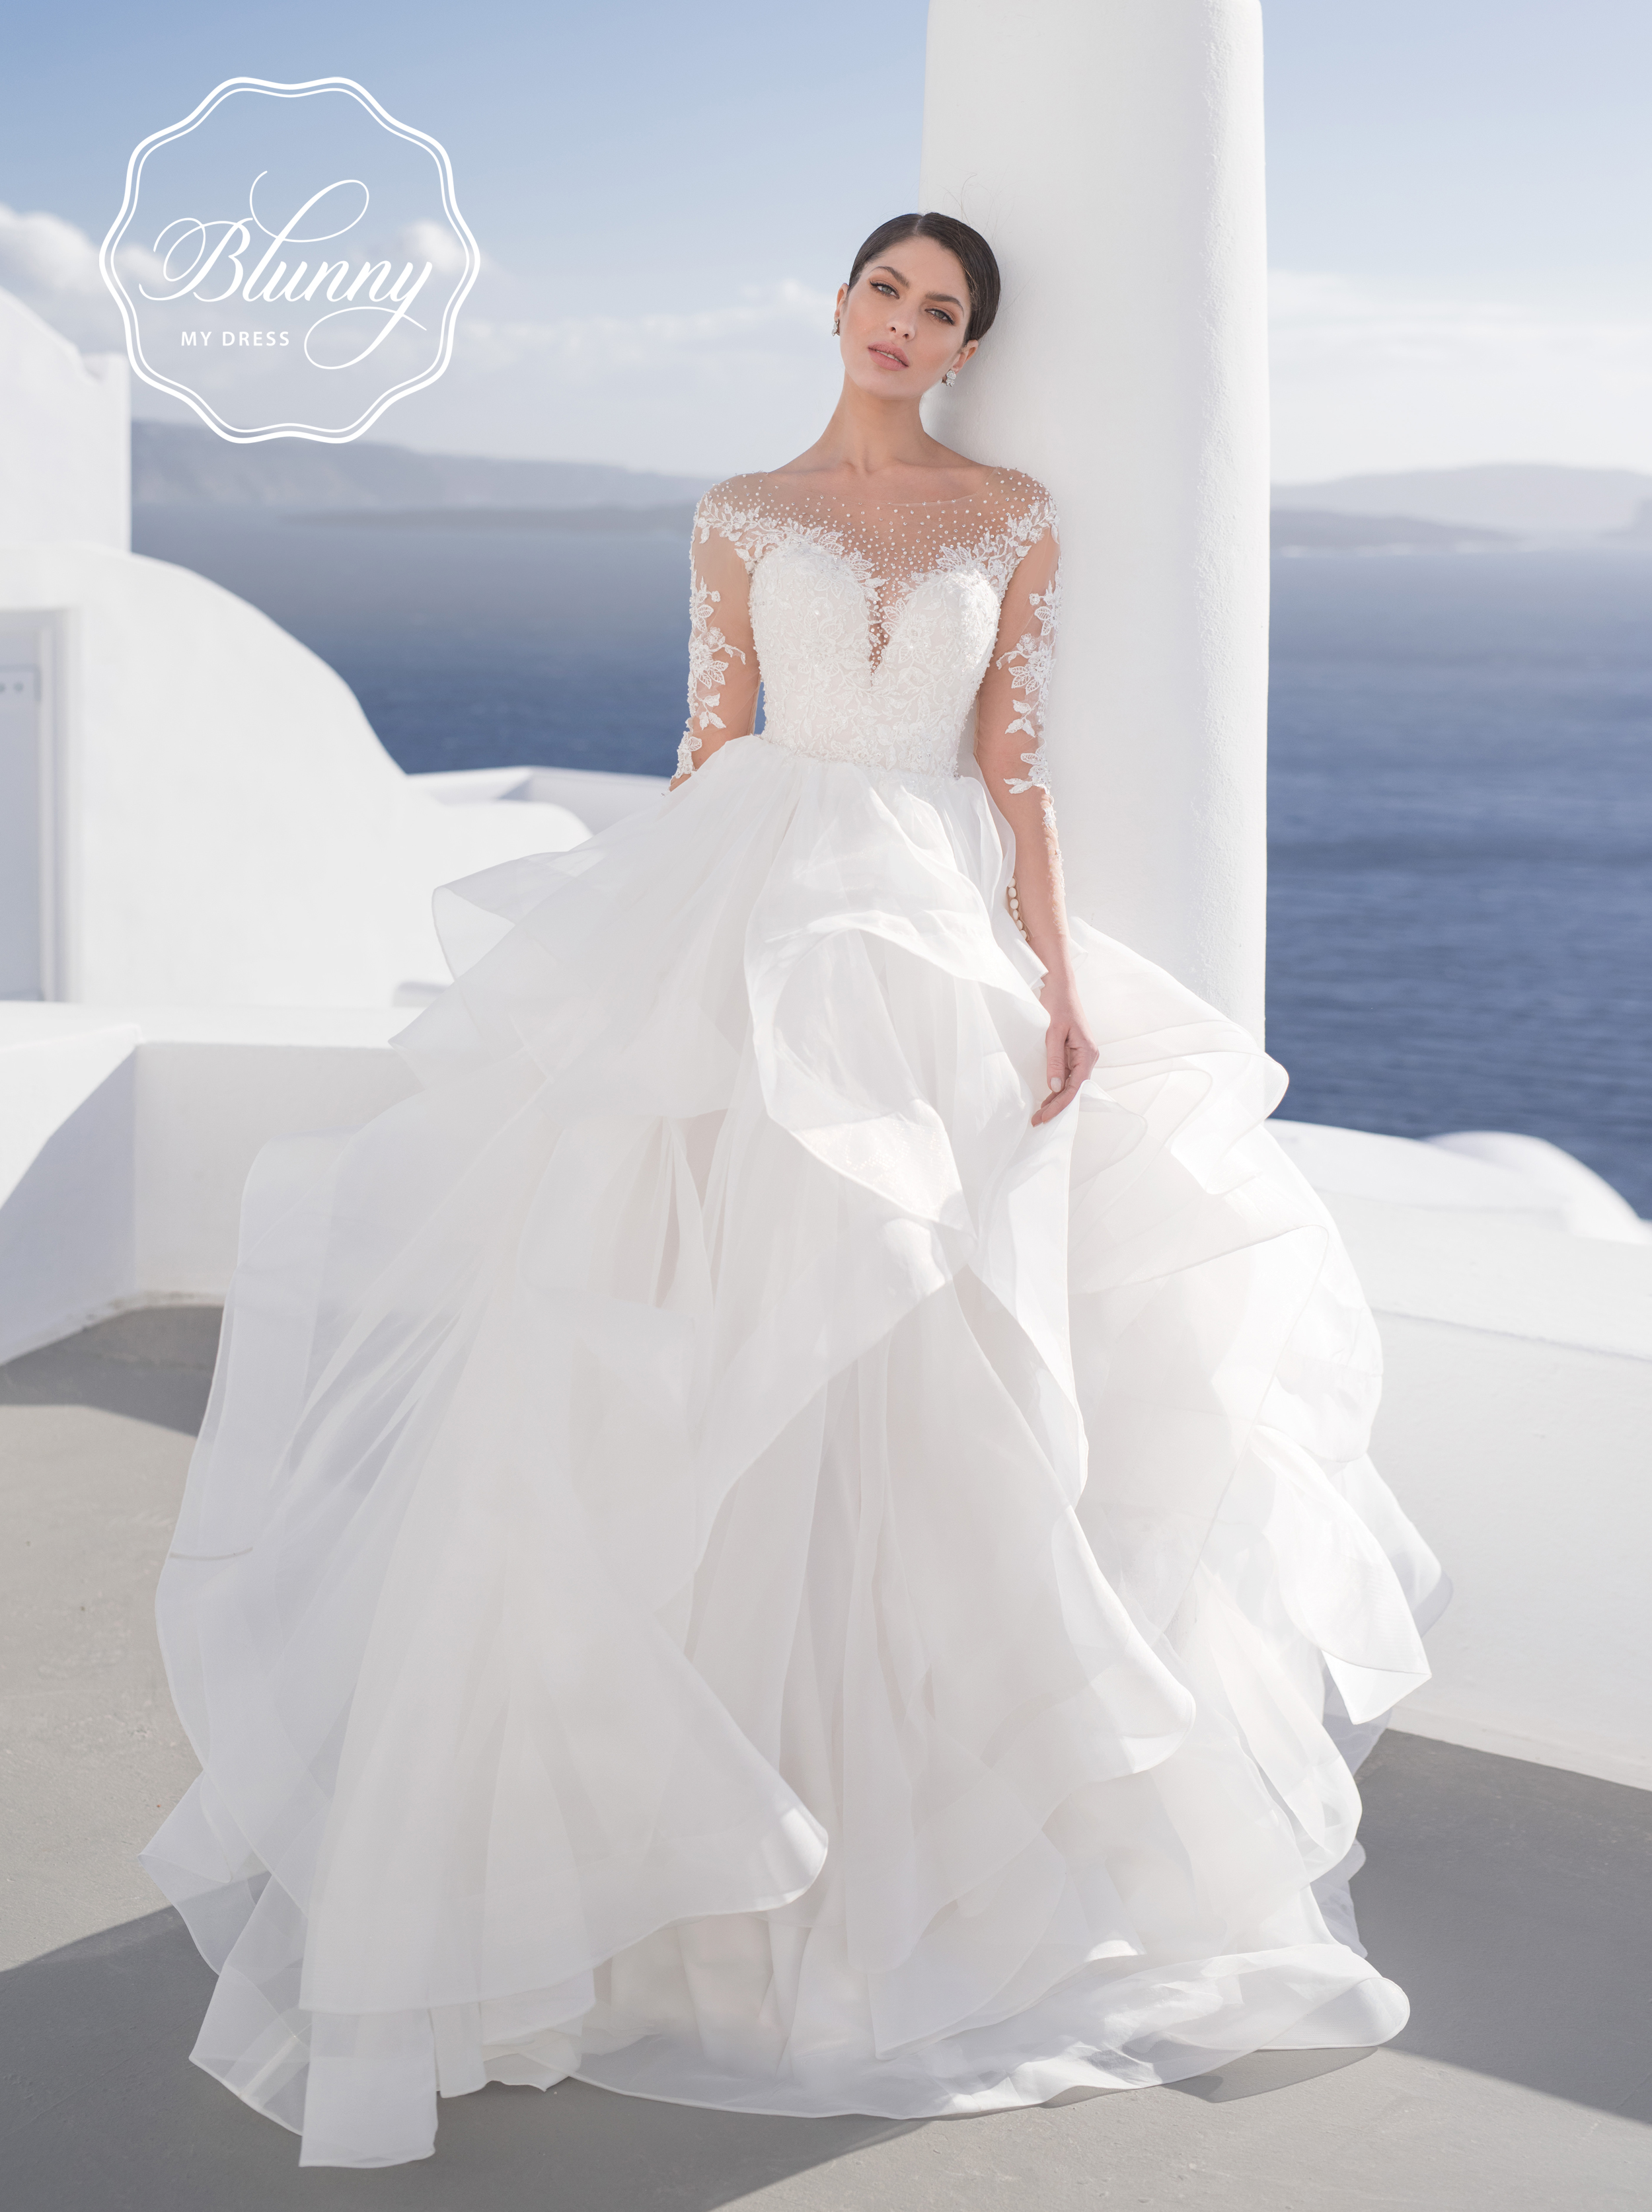 blunny-naviblue-lorin-21052-wedding-dress